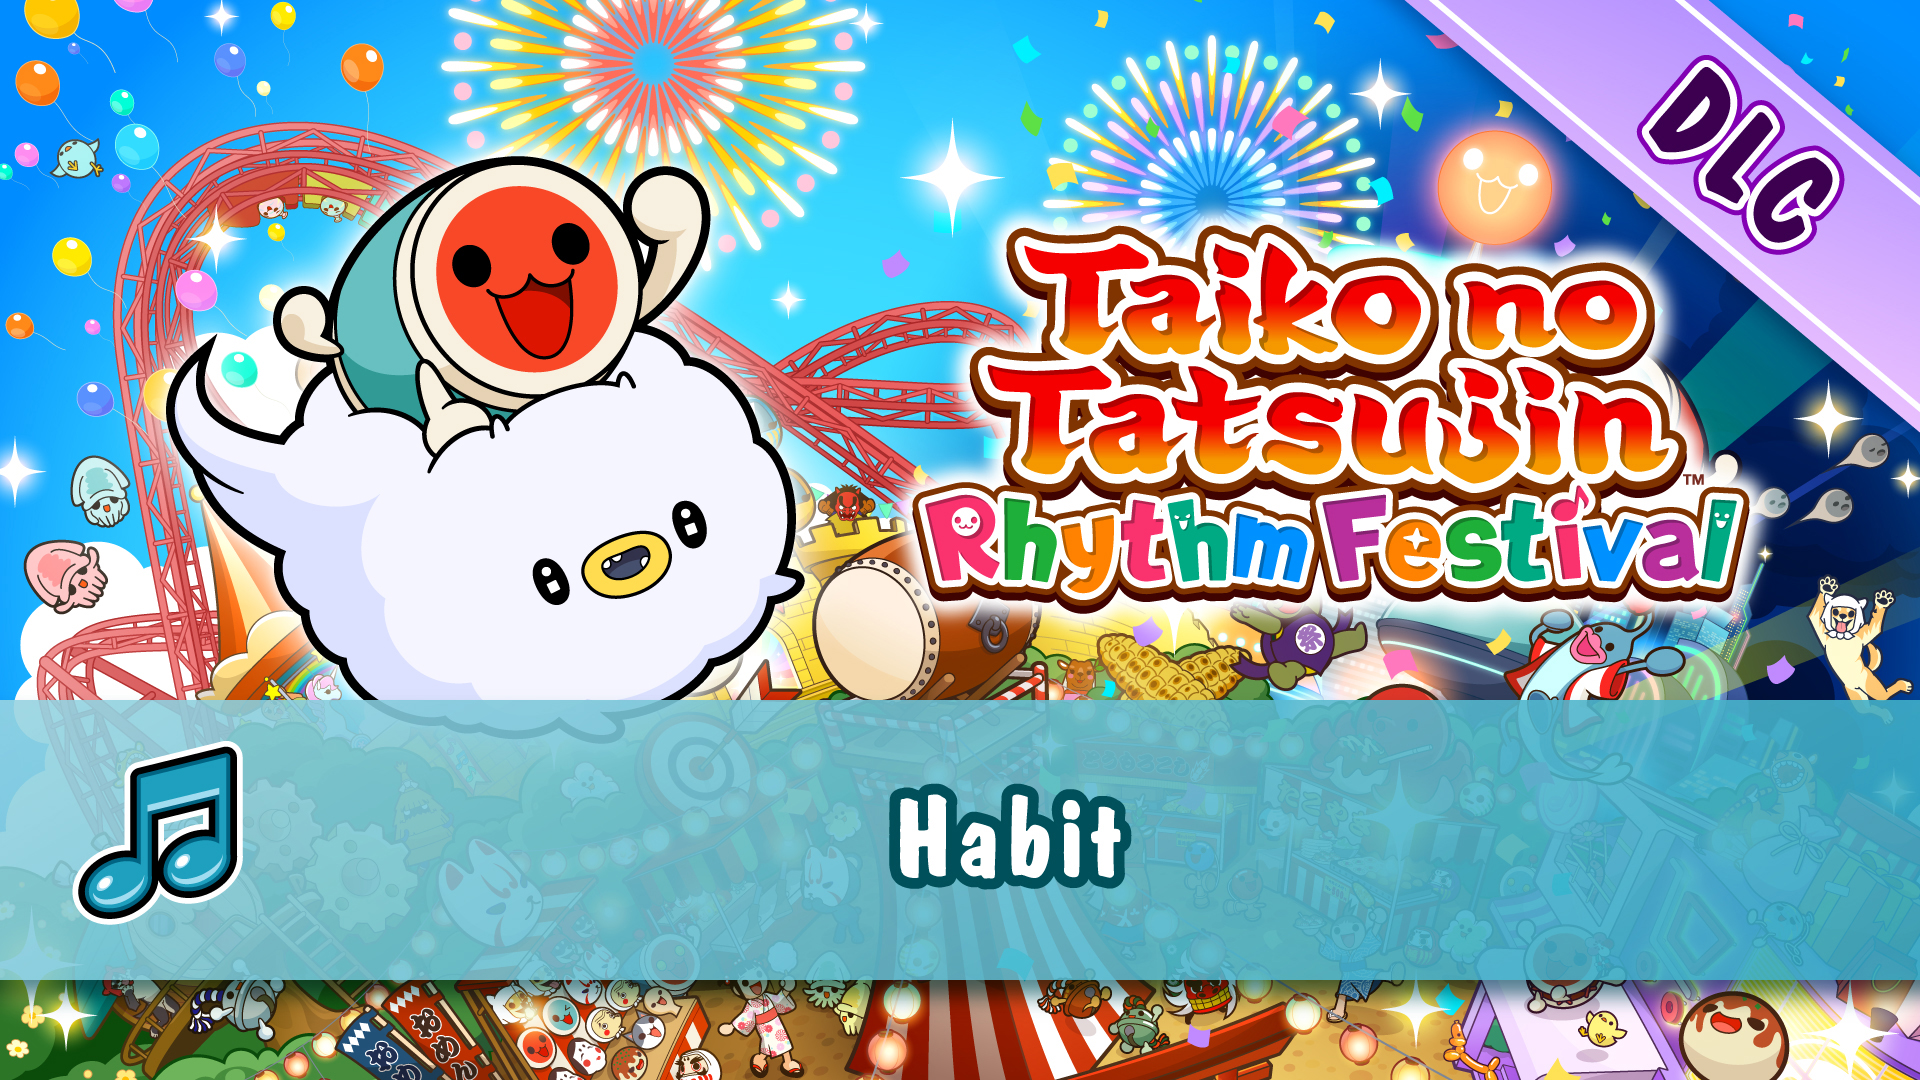 Taiko no Tatsujin: Rhythm Festival - Habit